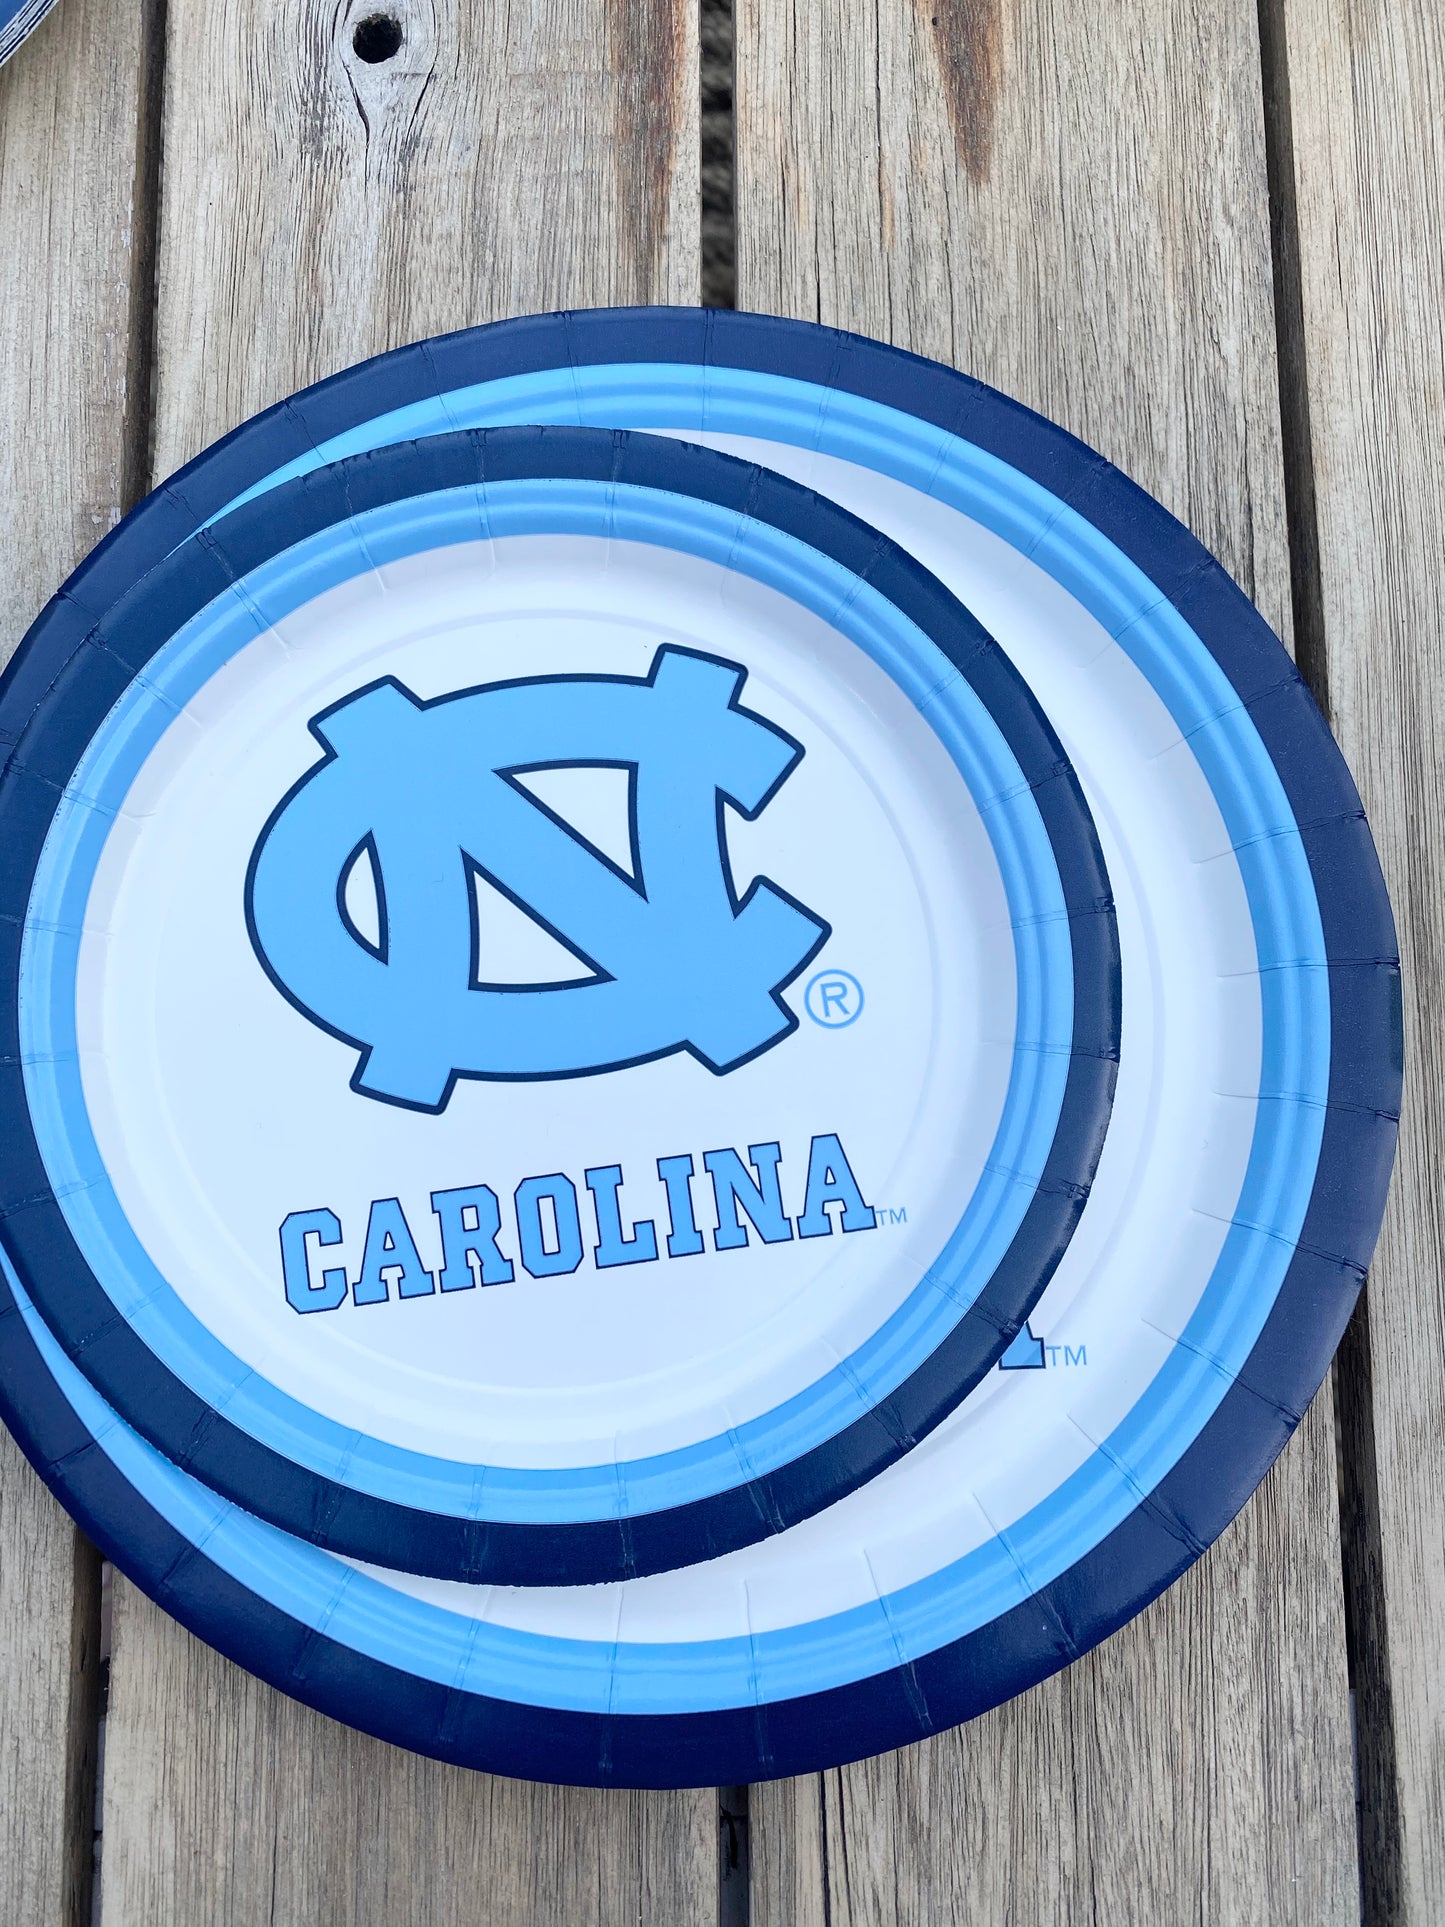 North Carolina Tar Heels 9 Inch Paper Plates (10 Count)